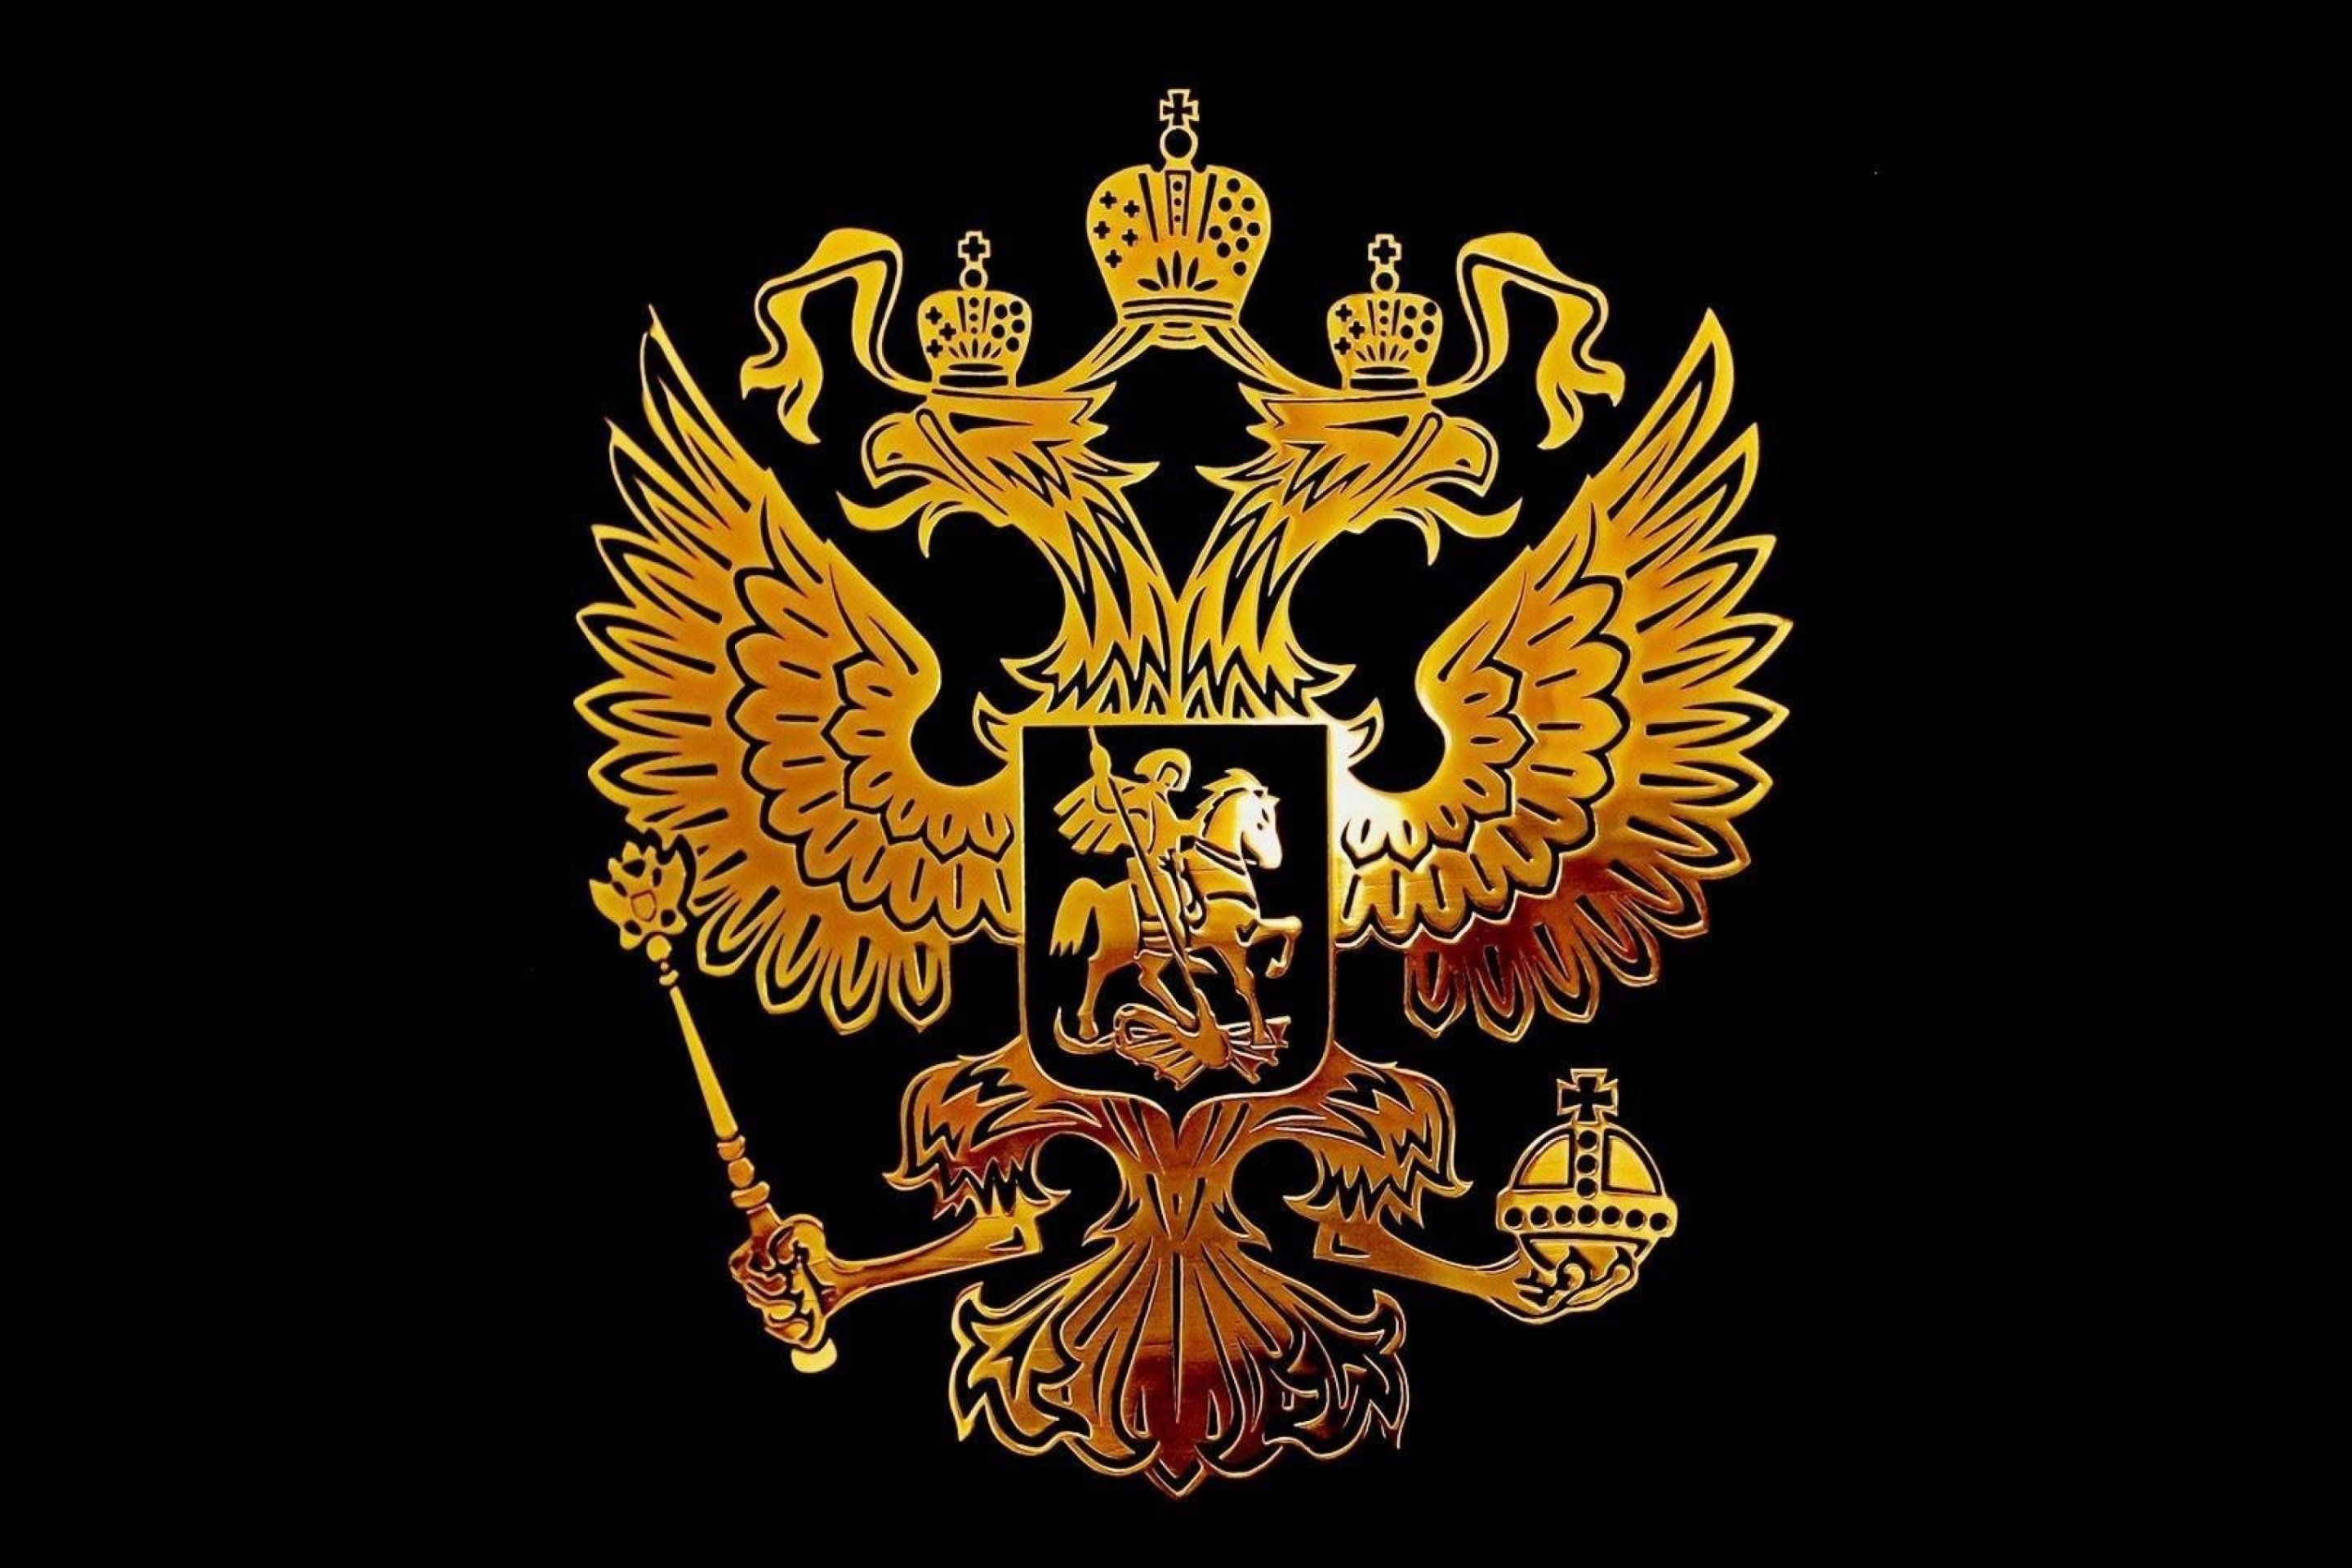 Герб россии фото на прозрачном фоне